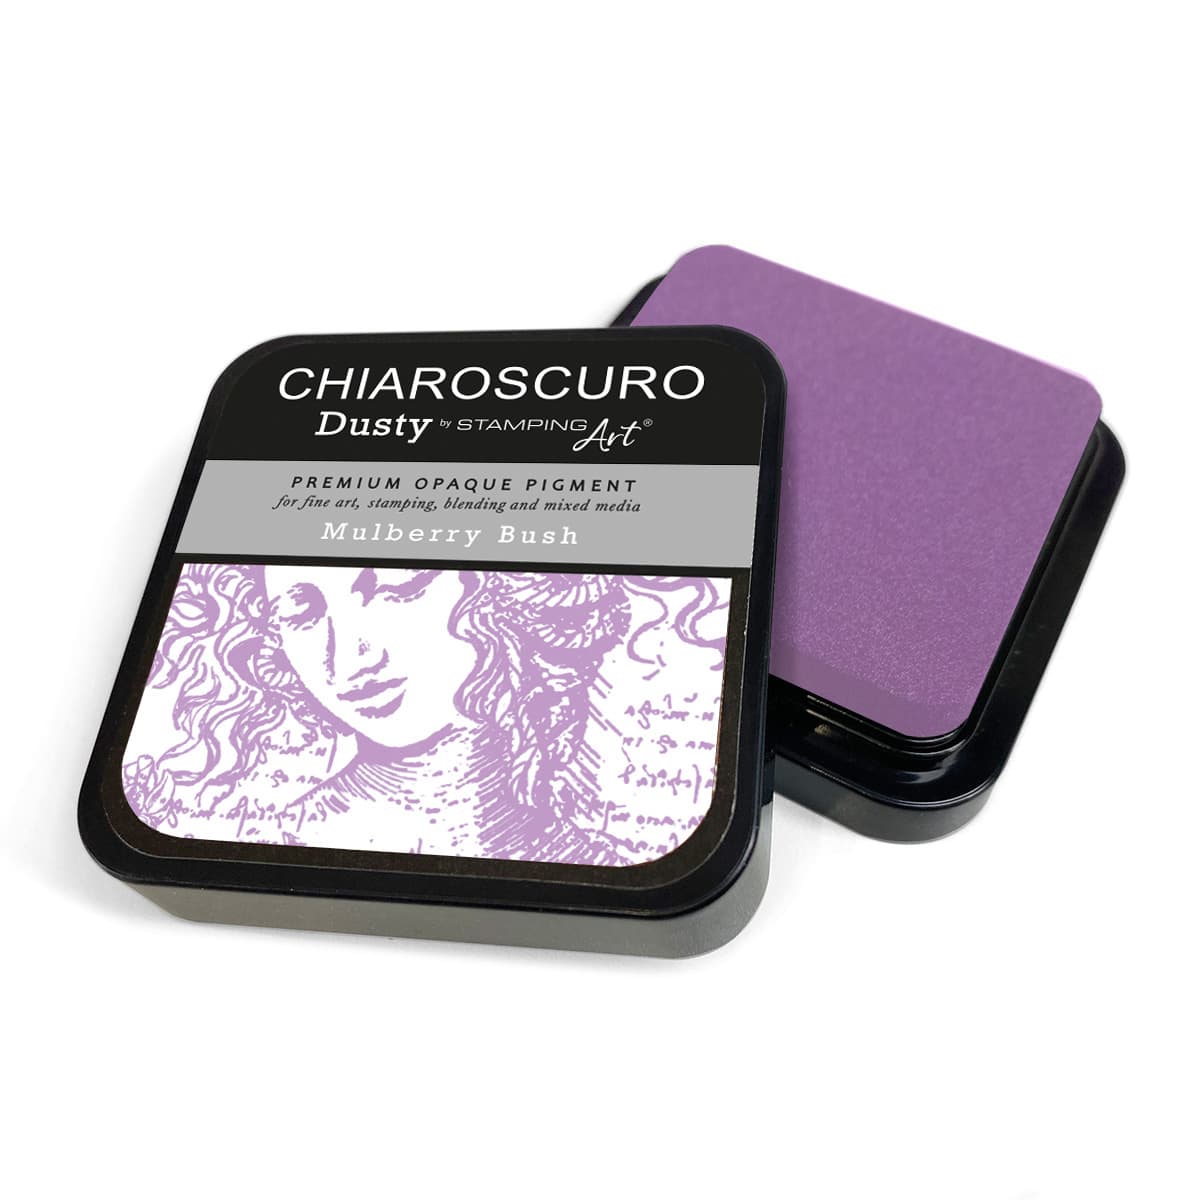 Mulberry Bush Chiaroscuro Dusty Ink Pad